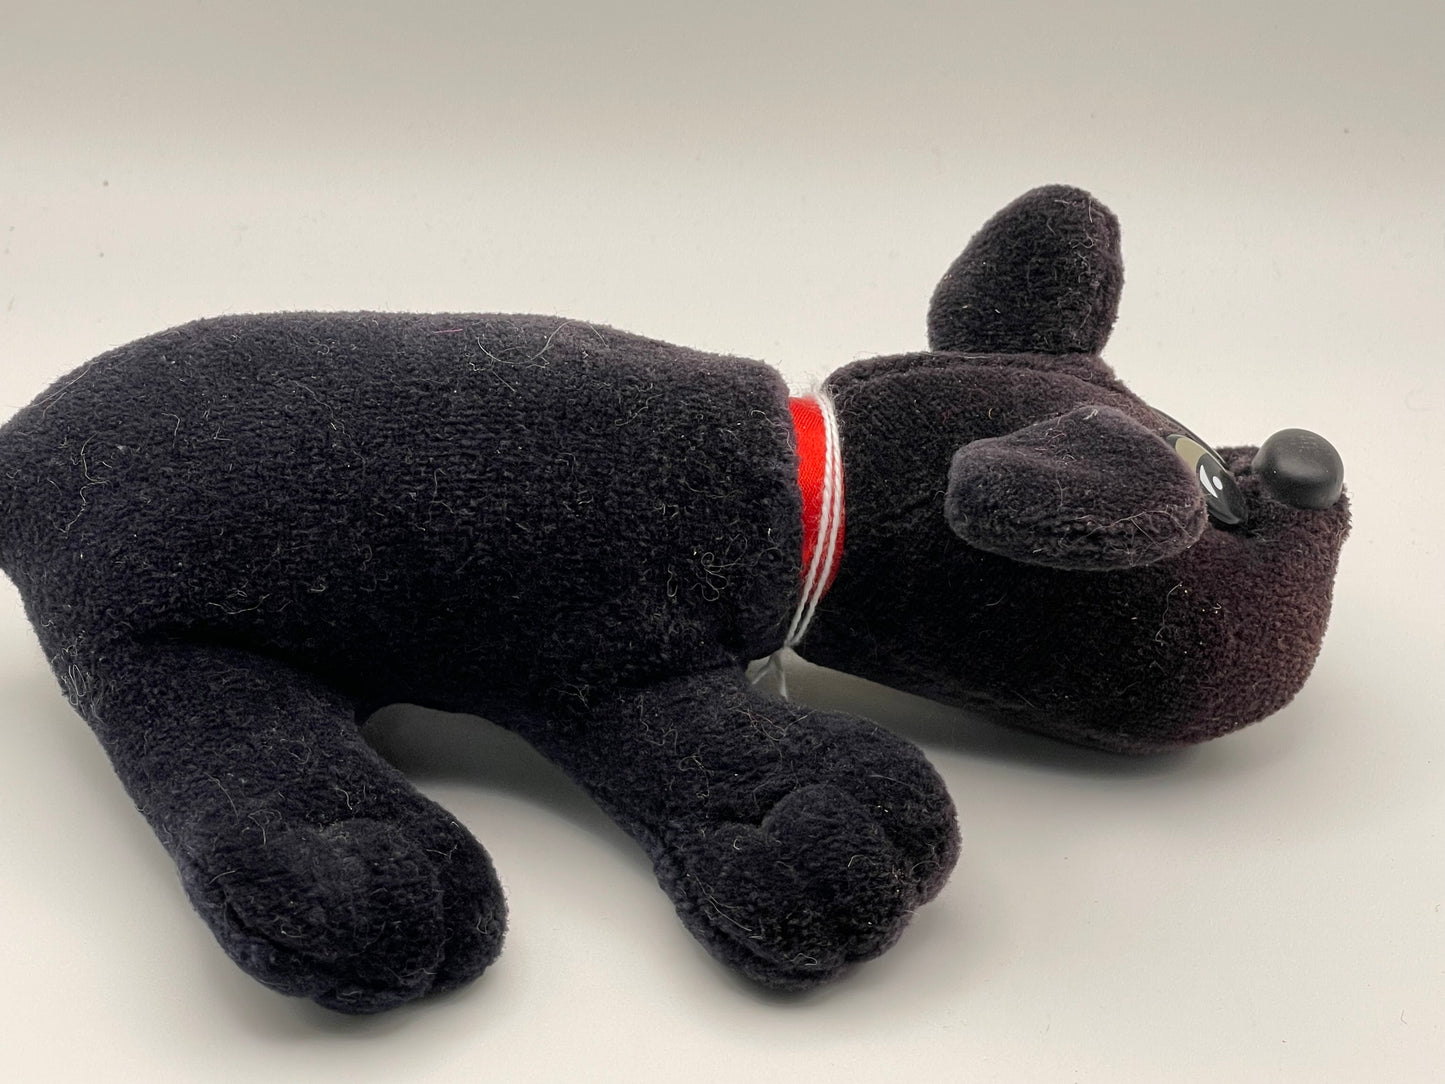 Pound Puppies - Small Black Dog 1986 #100813